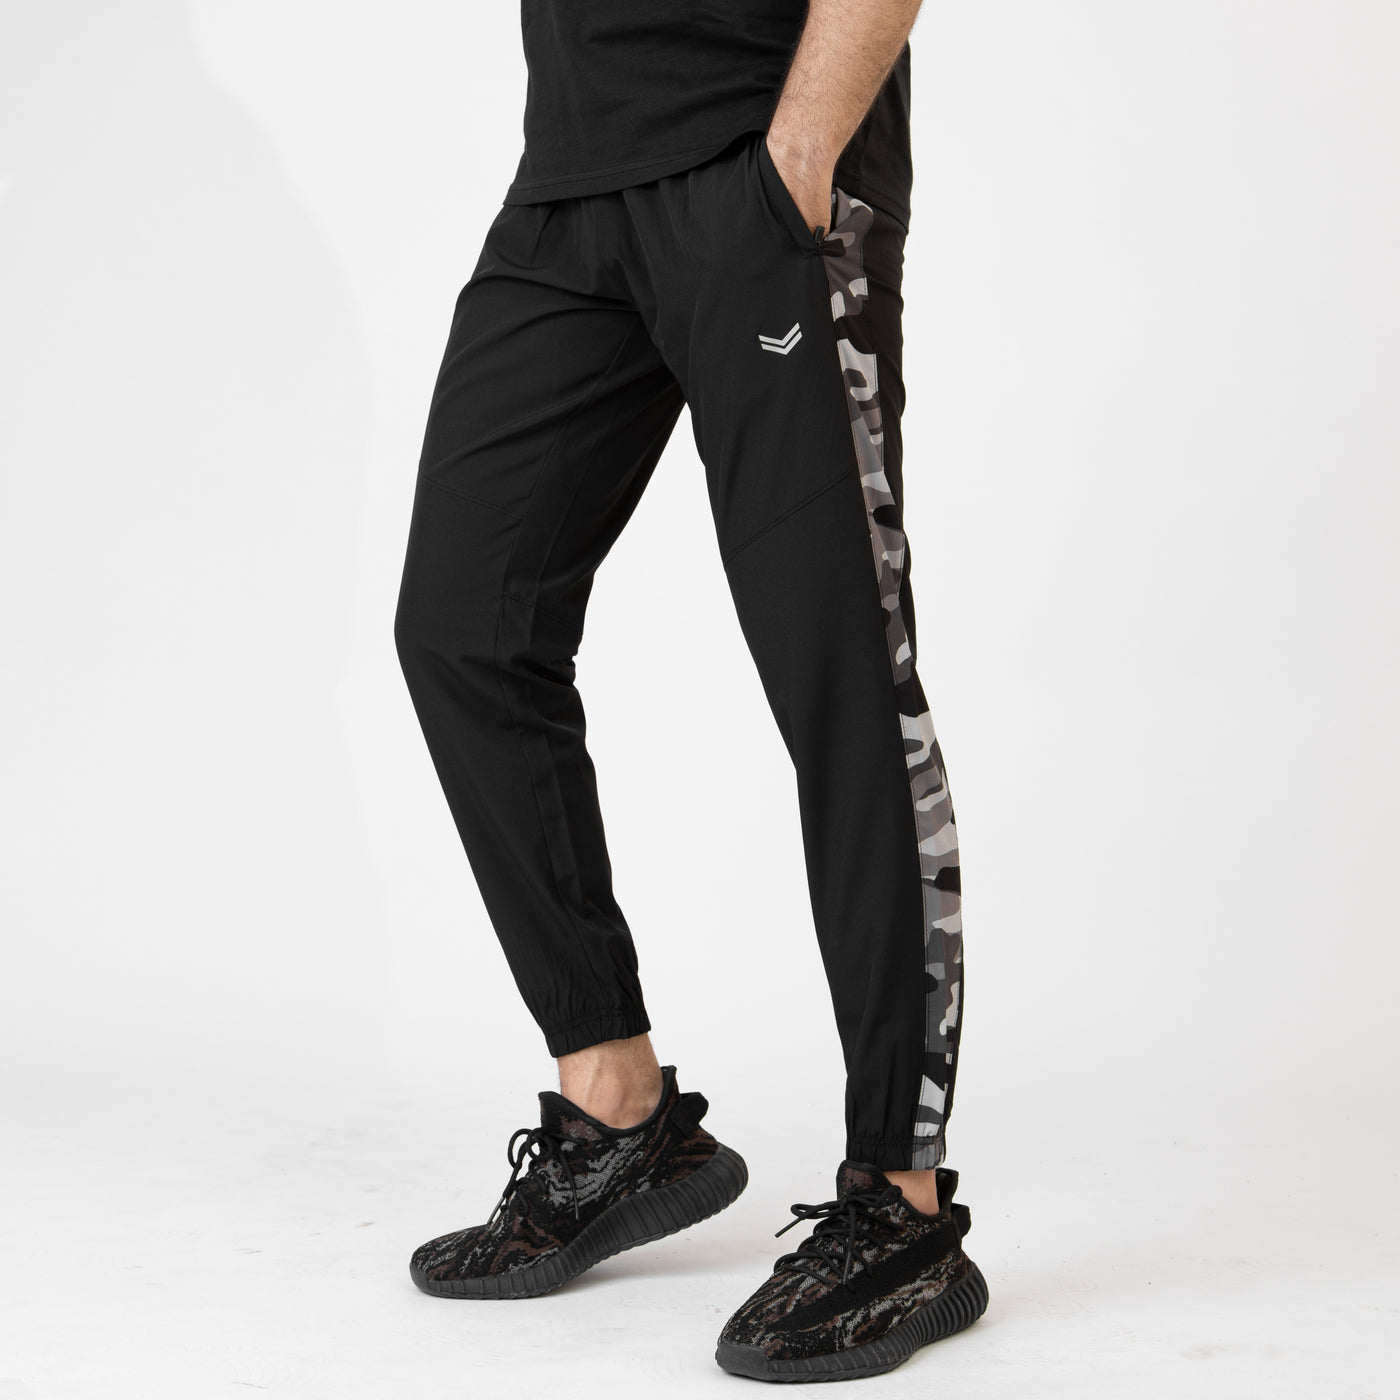 Black Premium Micro Stretch Tech Pants with Camo Panels